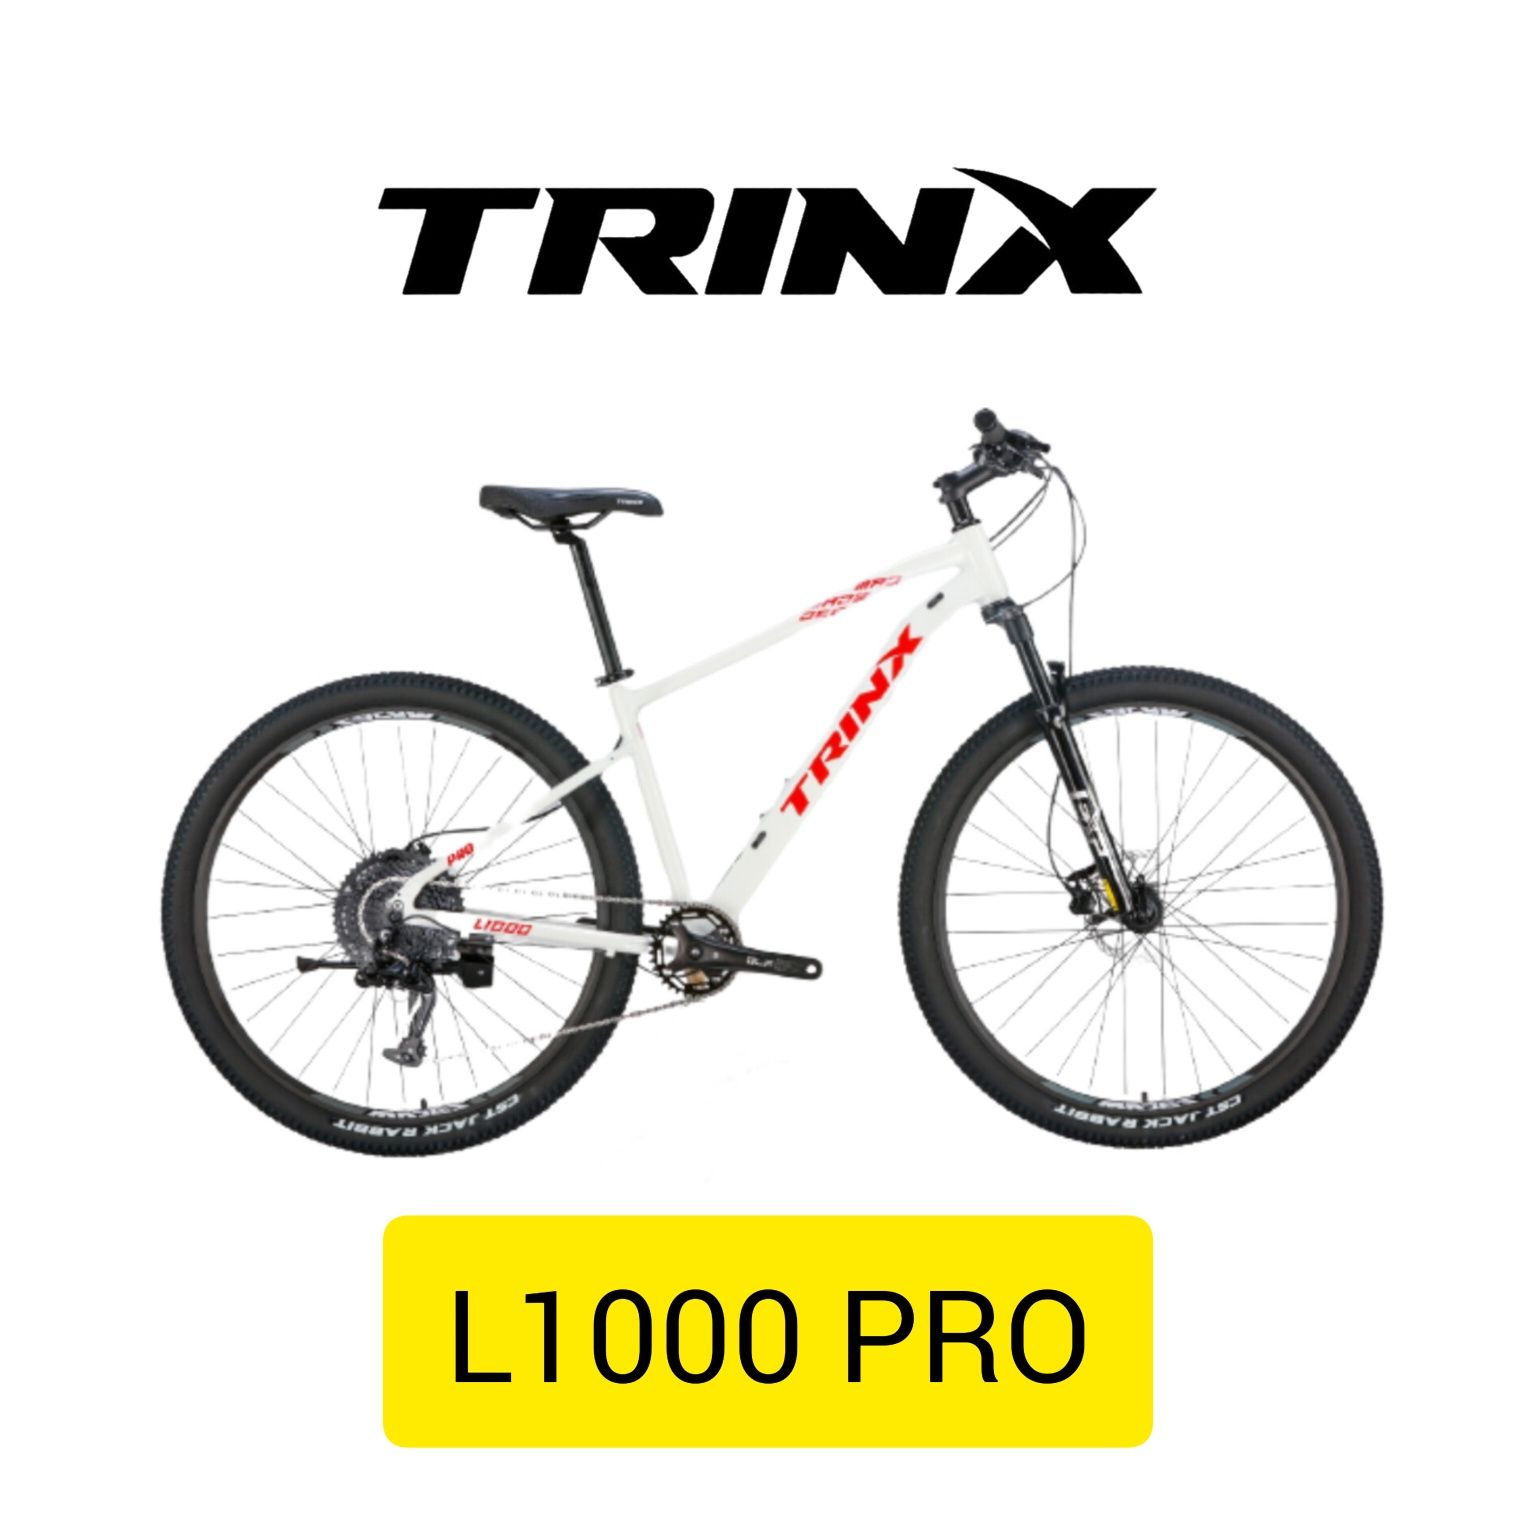 Велосипед Trinx L1000 PRO

Велосипед Tr